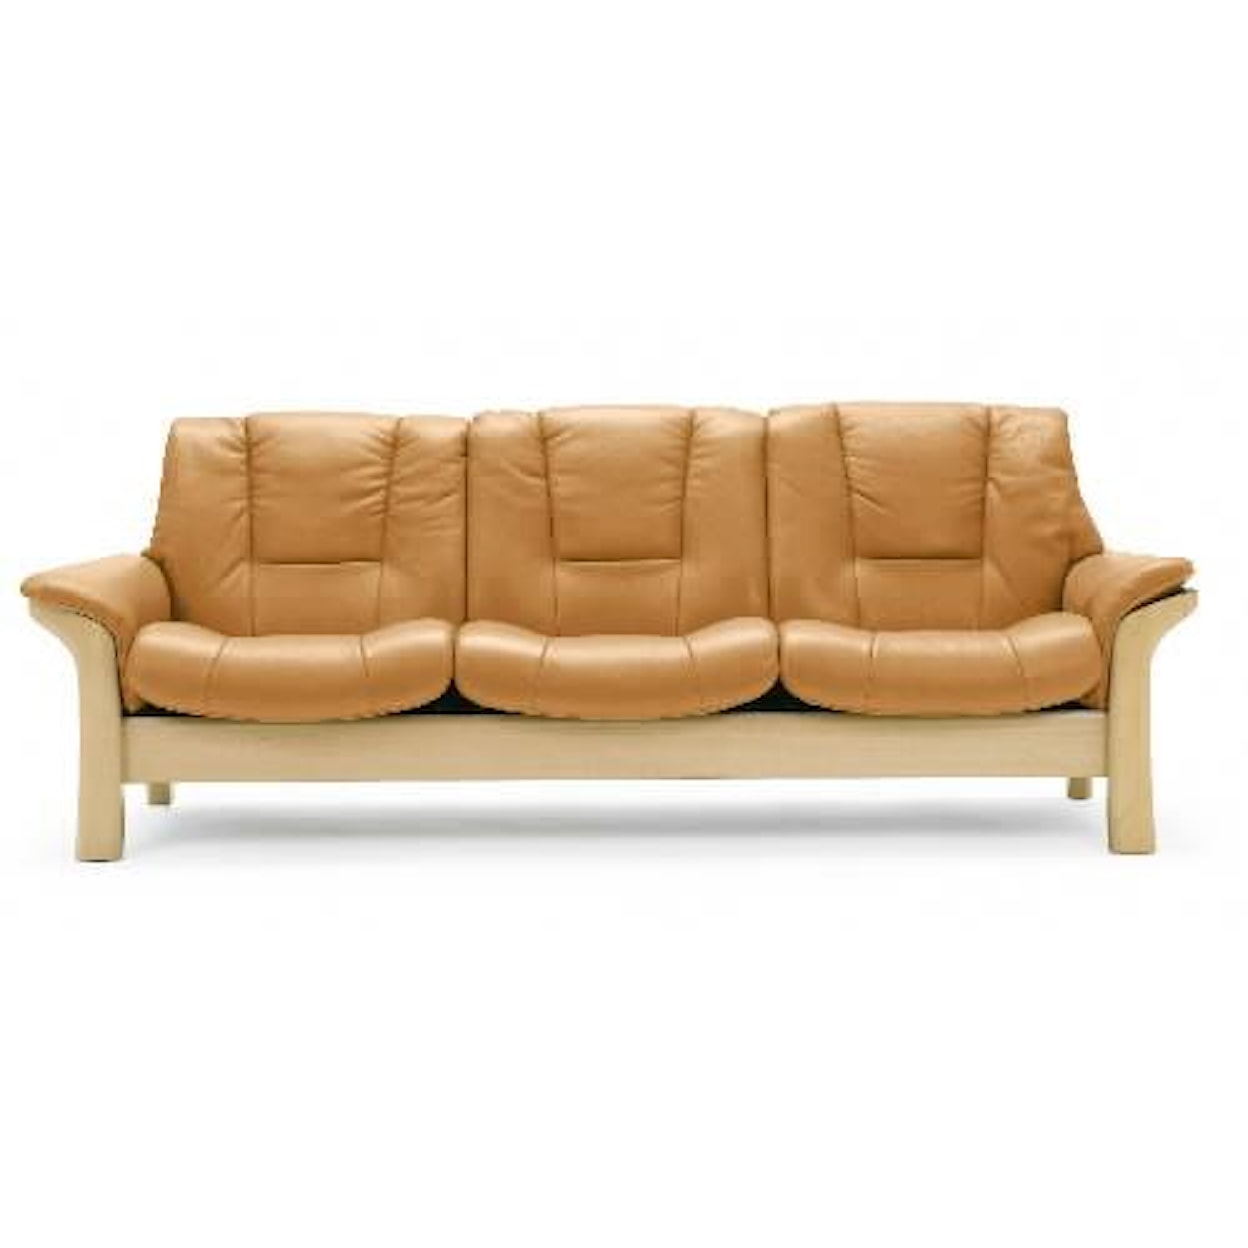 Stressless by Ekornes Buckingham Low-Back 3-Seater Reclining Sofa